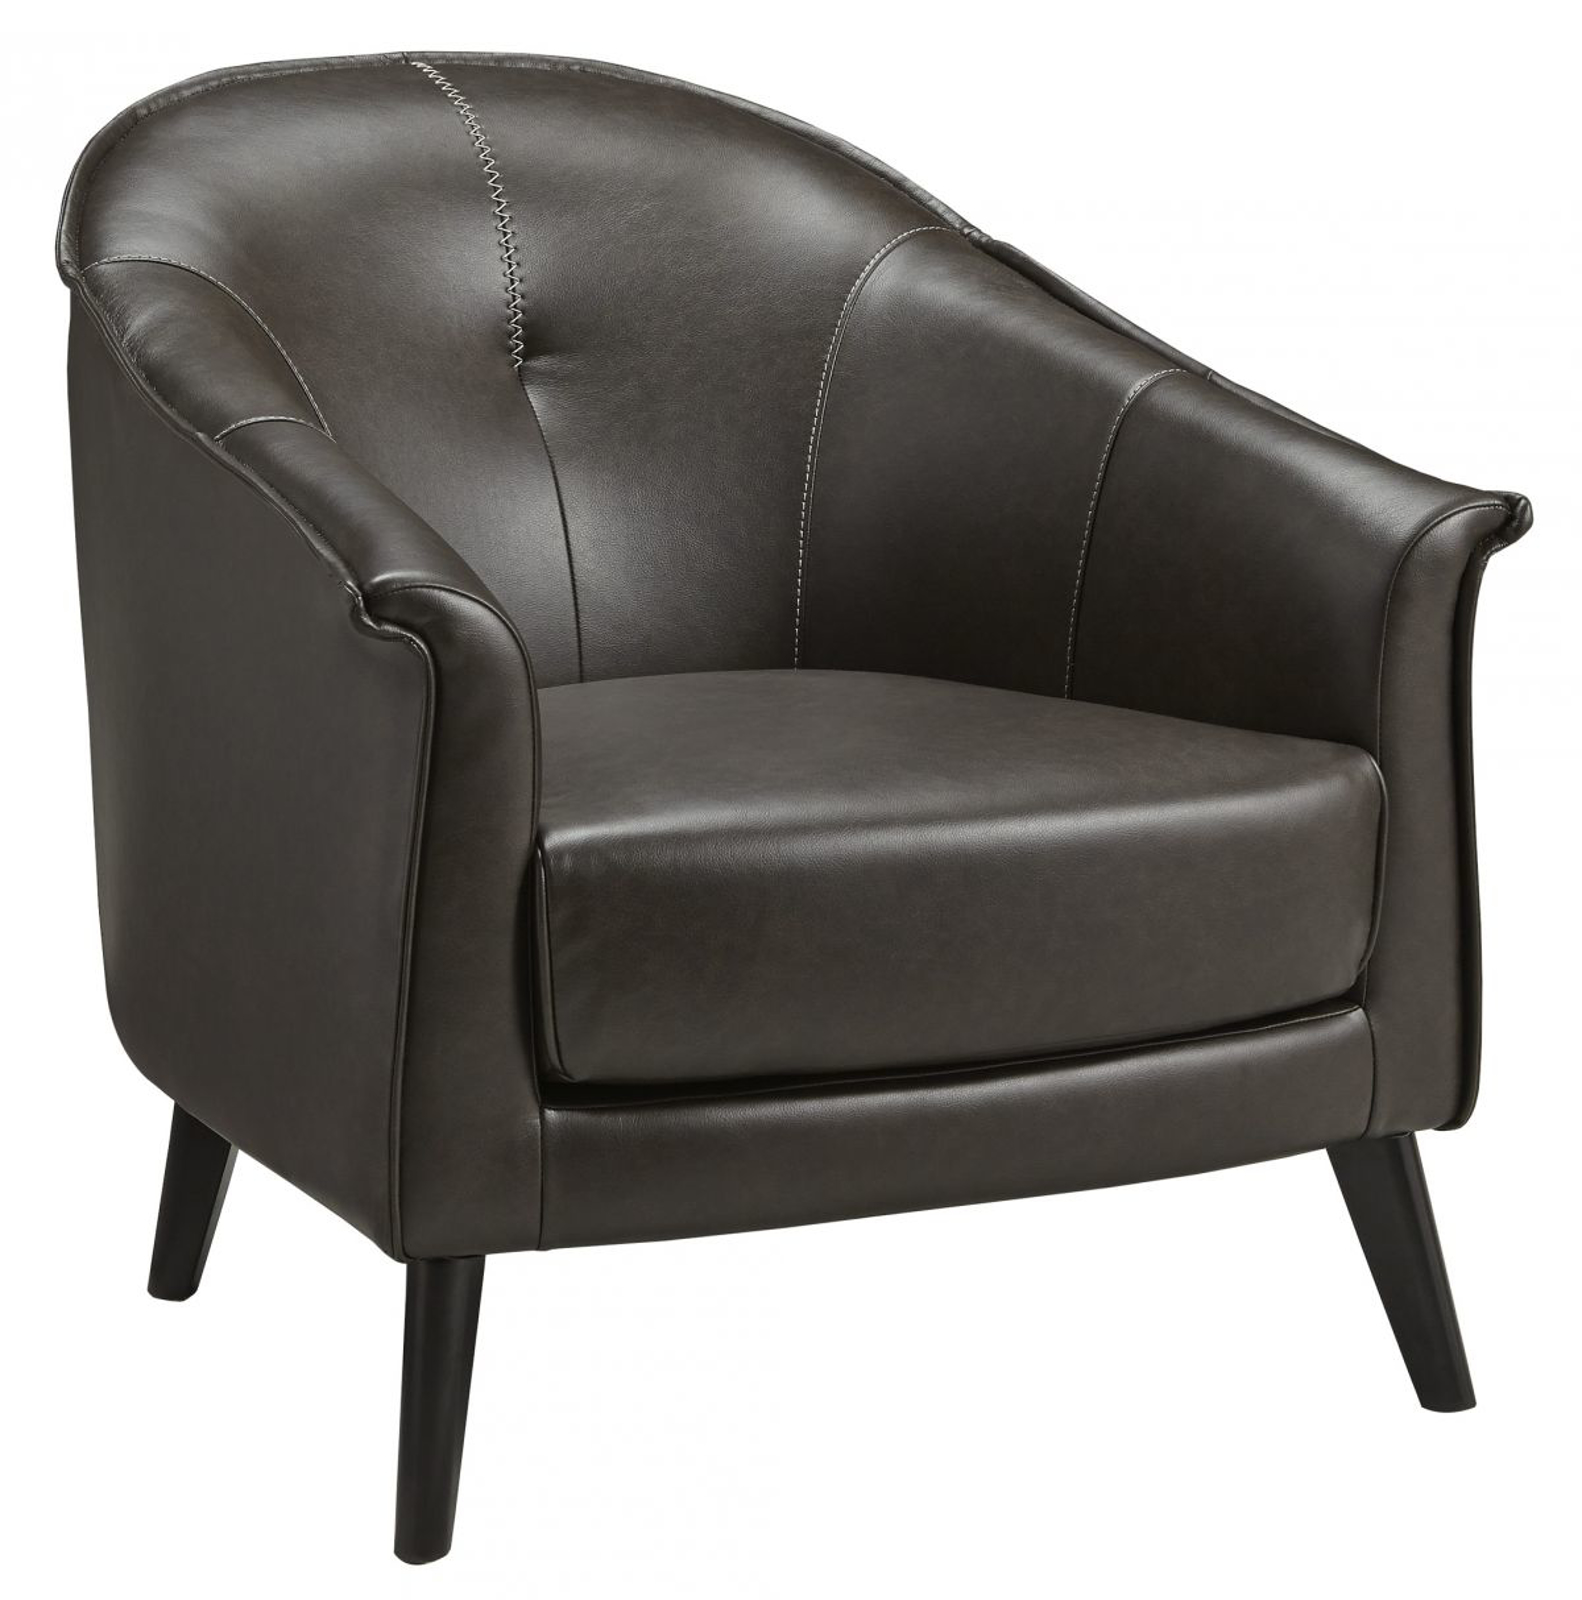 Picture of Brickham Chair